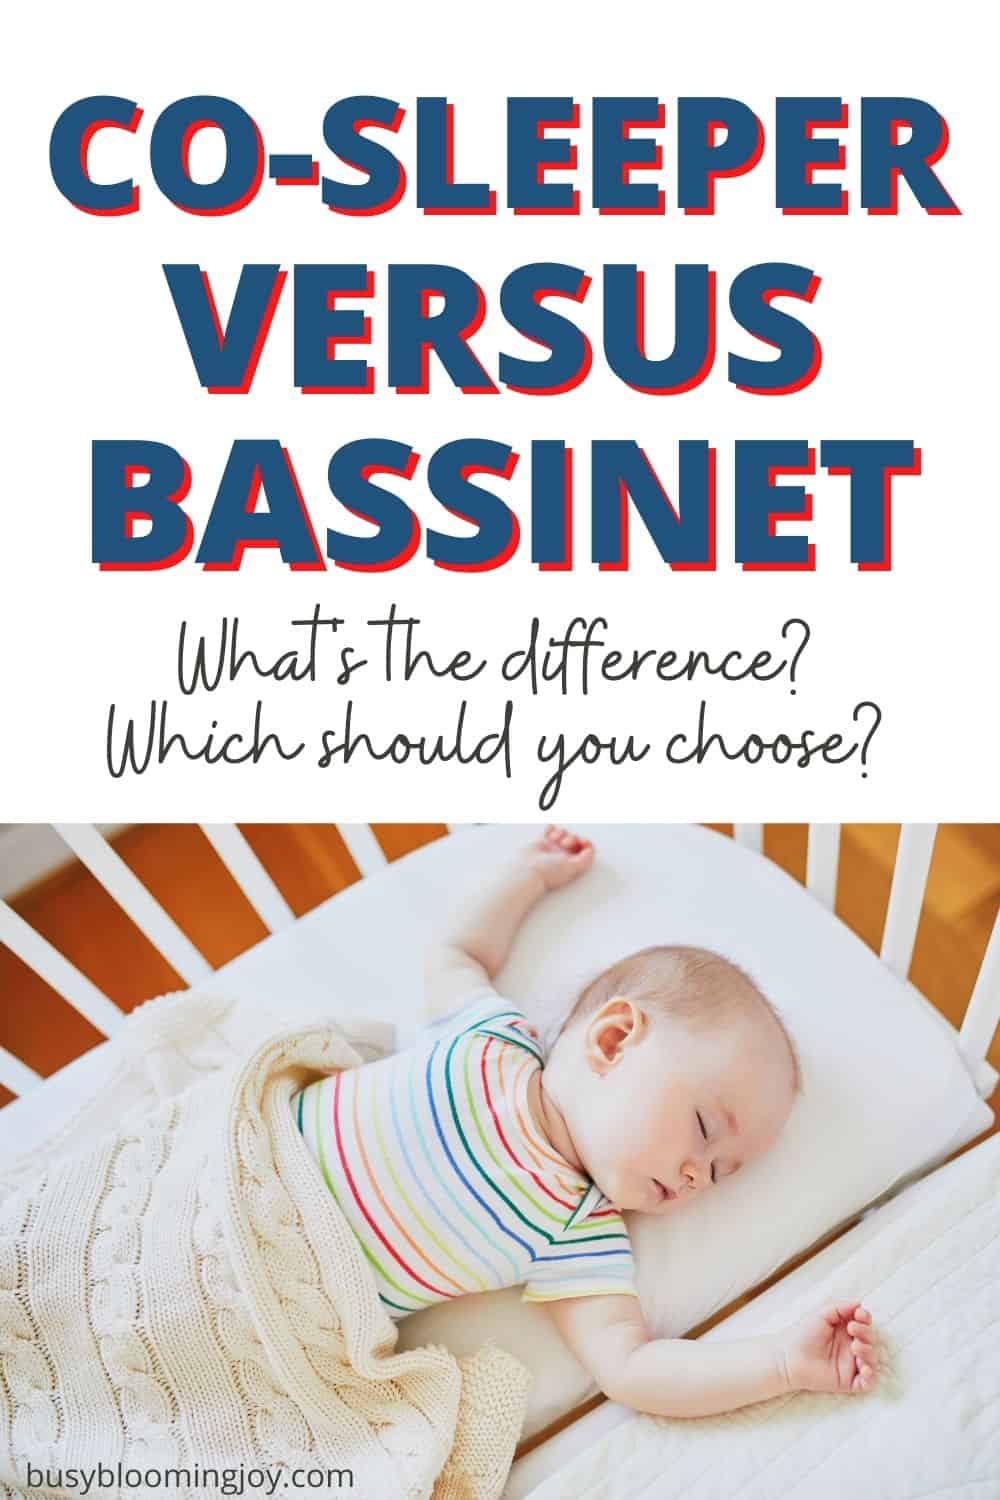 Baby bassinet vs. Co-sleeper: 5 important considerations